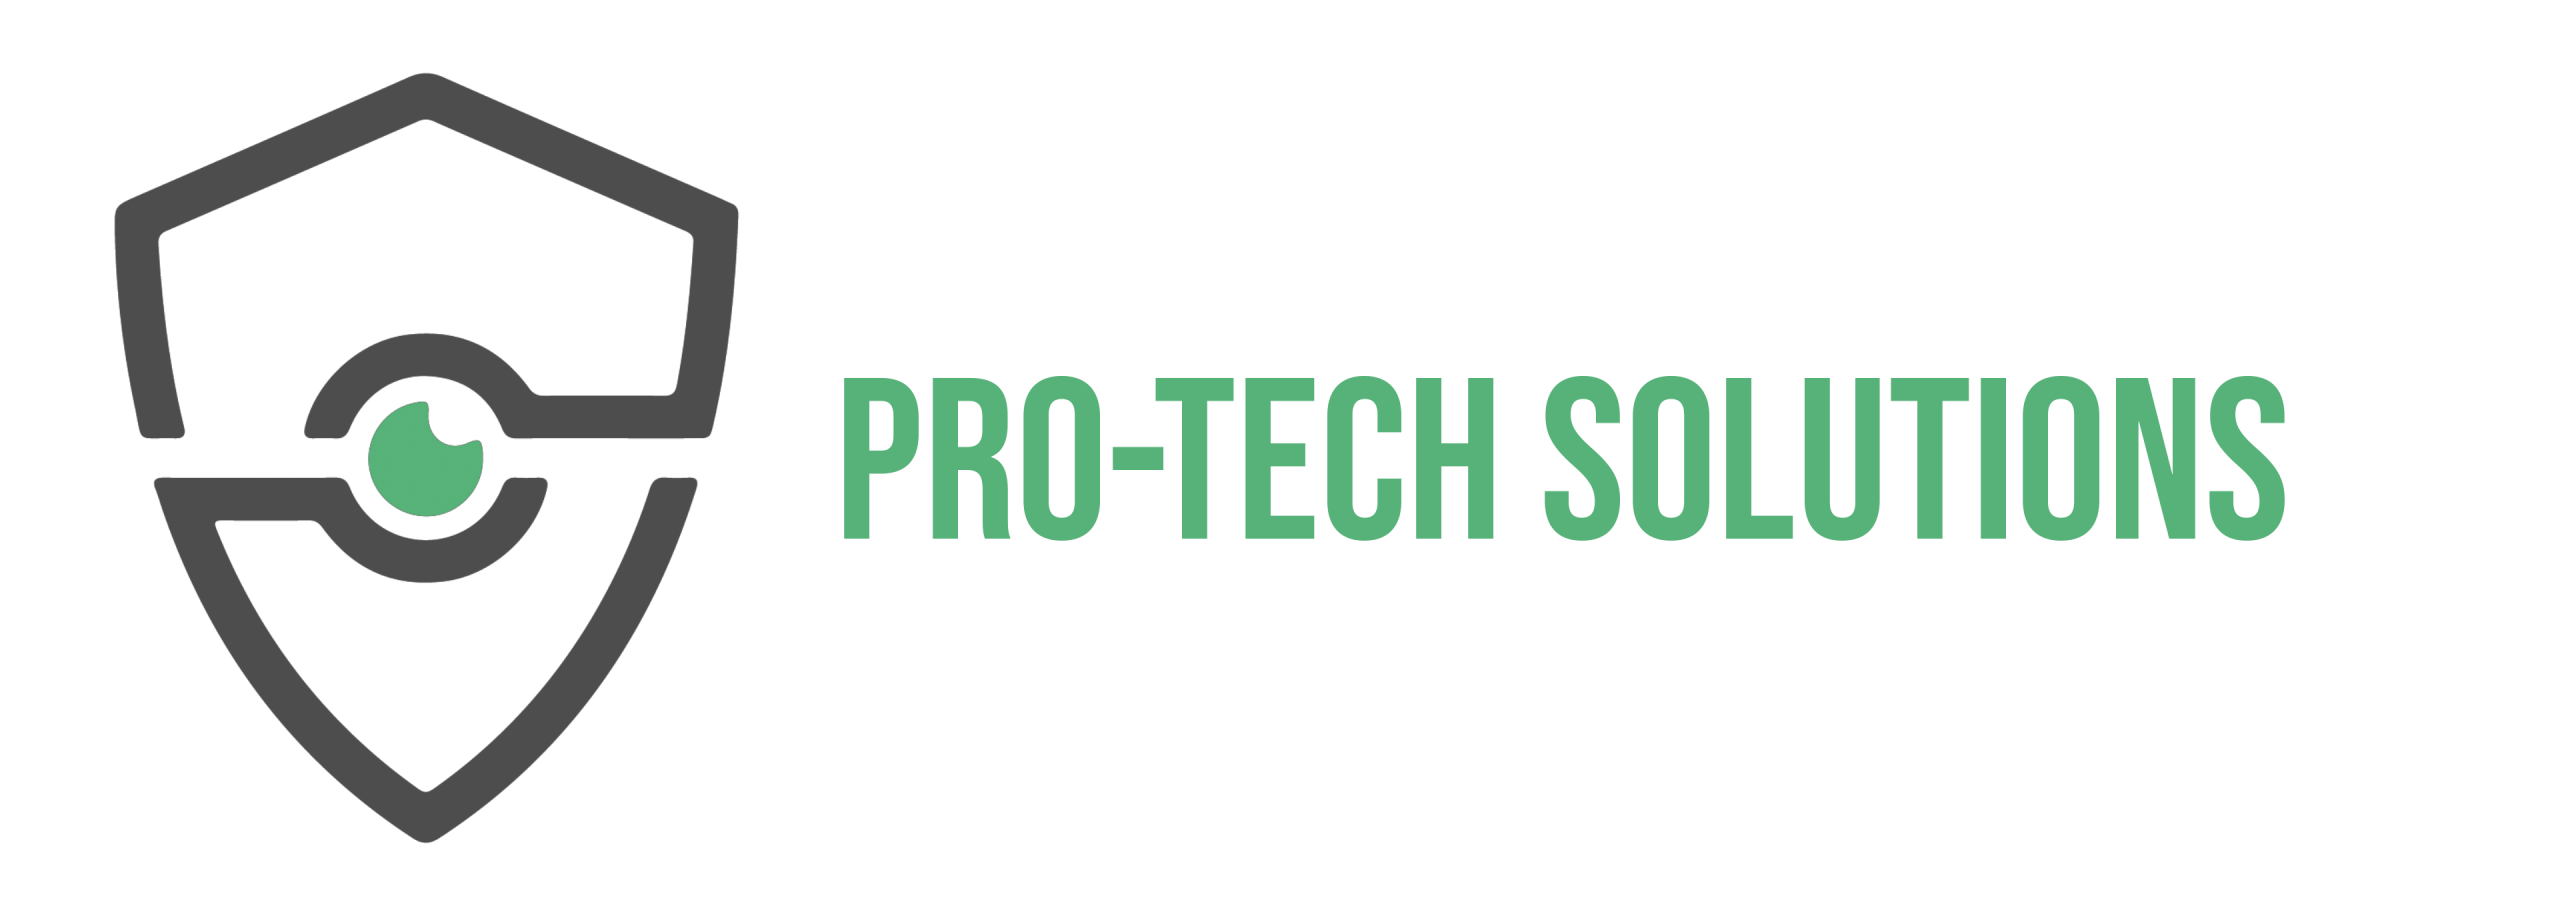 Pro-Tech Solutions